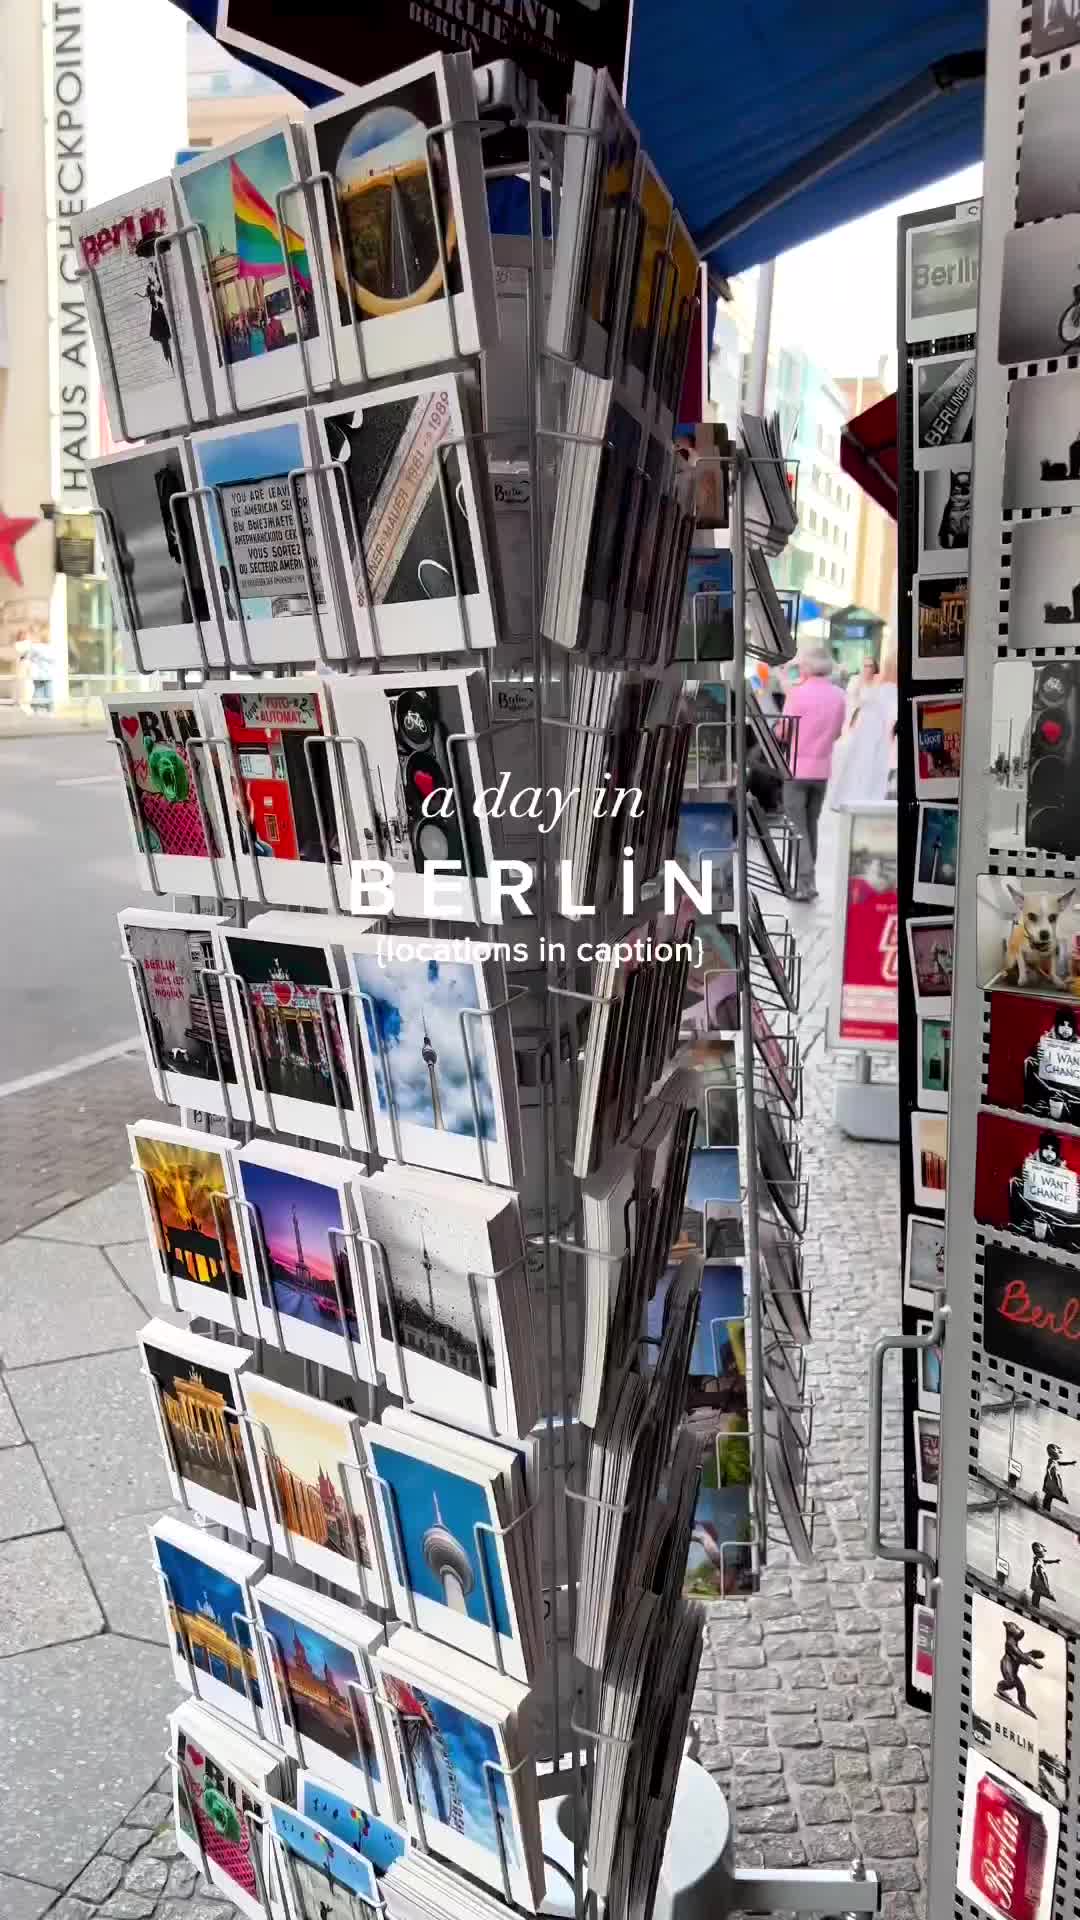 Berlin Mini Guide: Top Sights, Eats & Drinks